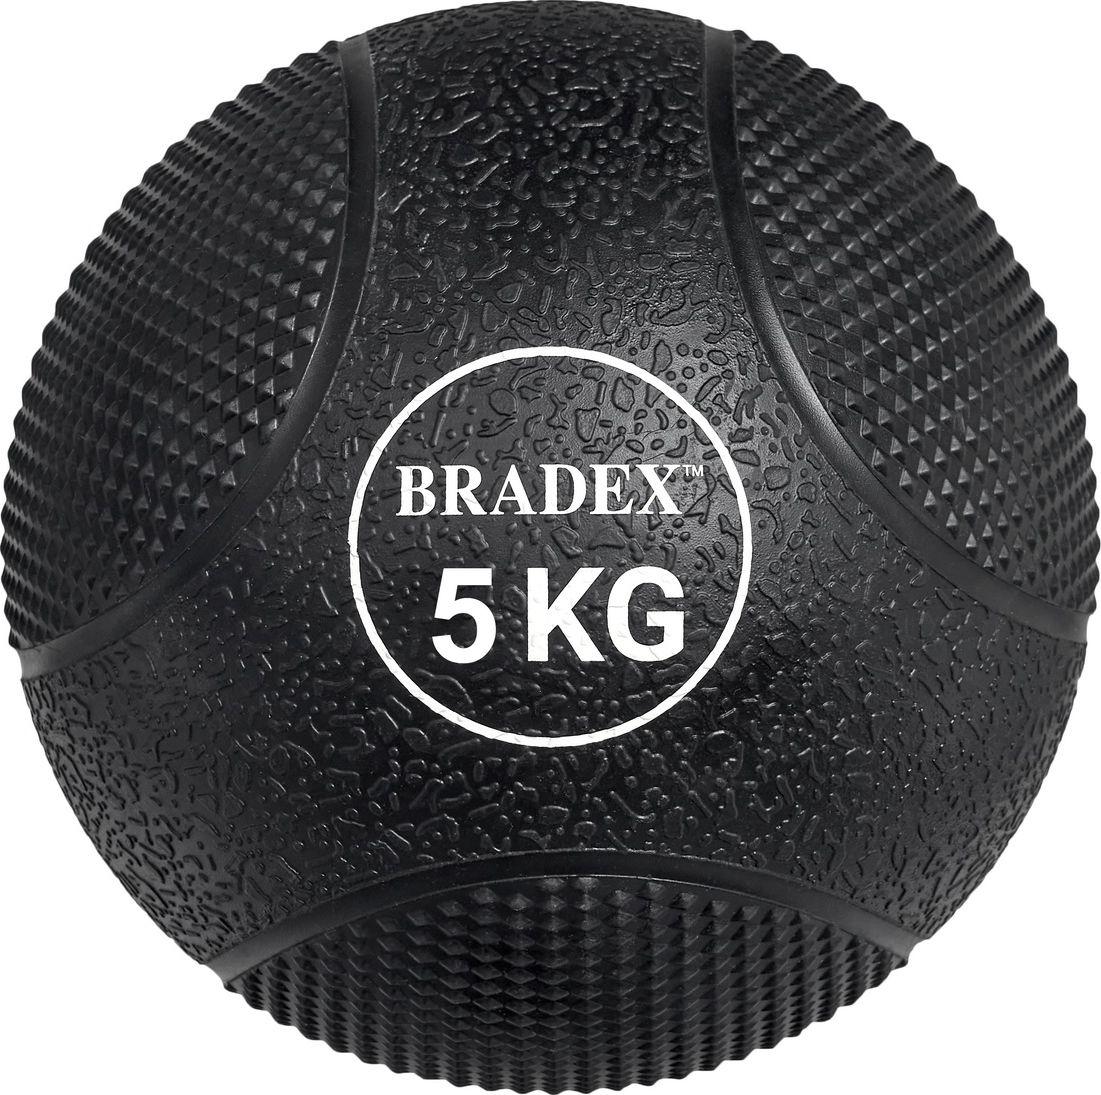 Медбол резиновый, Bradex SF 0774, 5кг